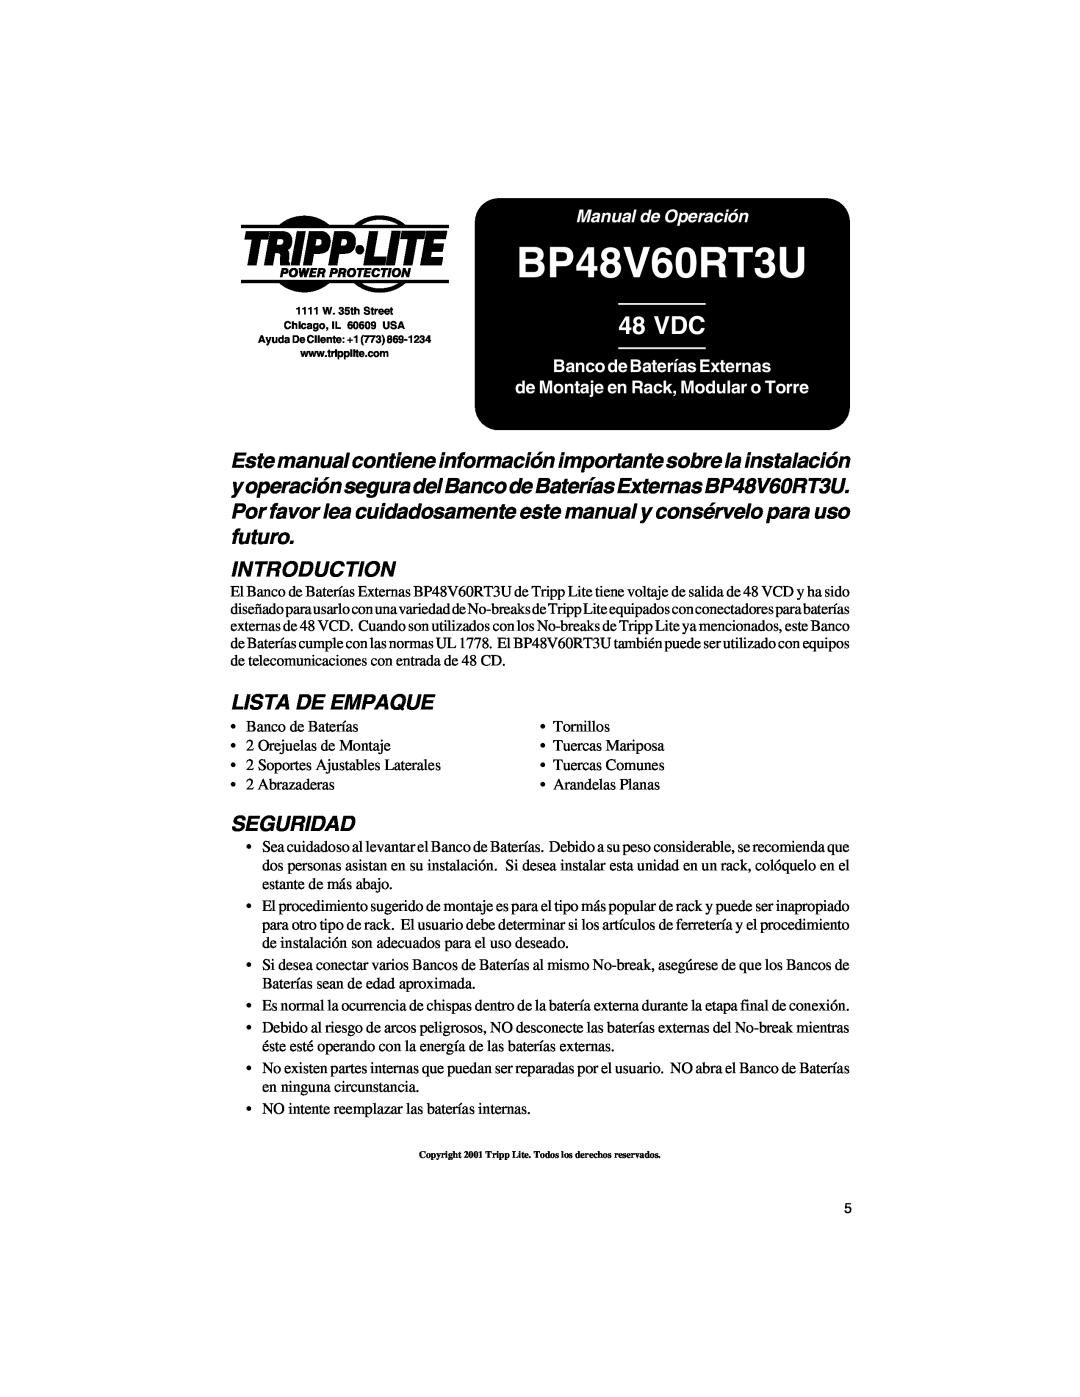 Tripp Lite BP48V60RT3U owner manual 48 VDC, Lista De Empaque, Seguridad, Manual de Operación, Introduction 